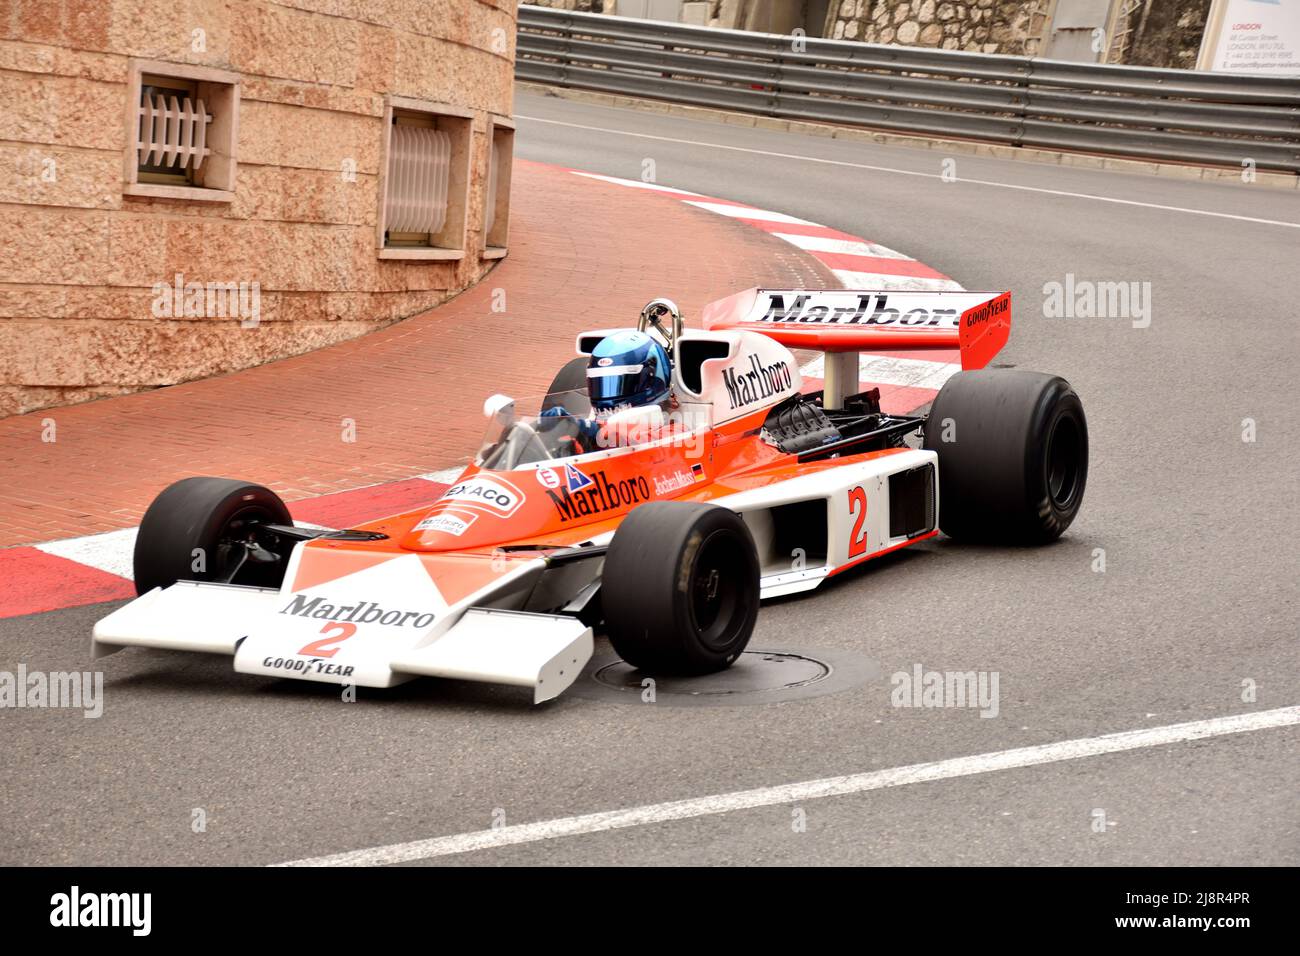 Historic monaco grand prix 2022 - saturday qualifying and sunday race Stock Photo